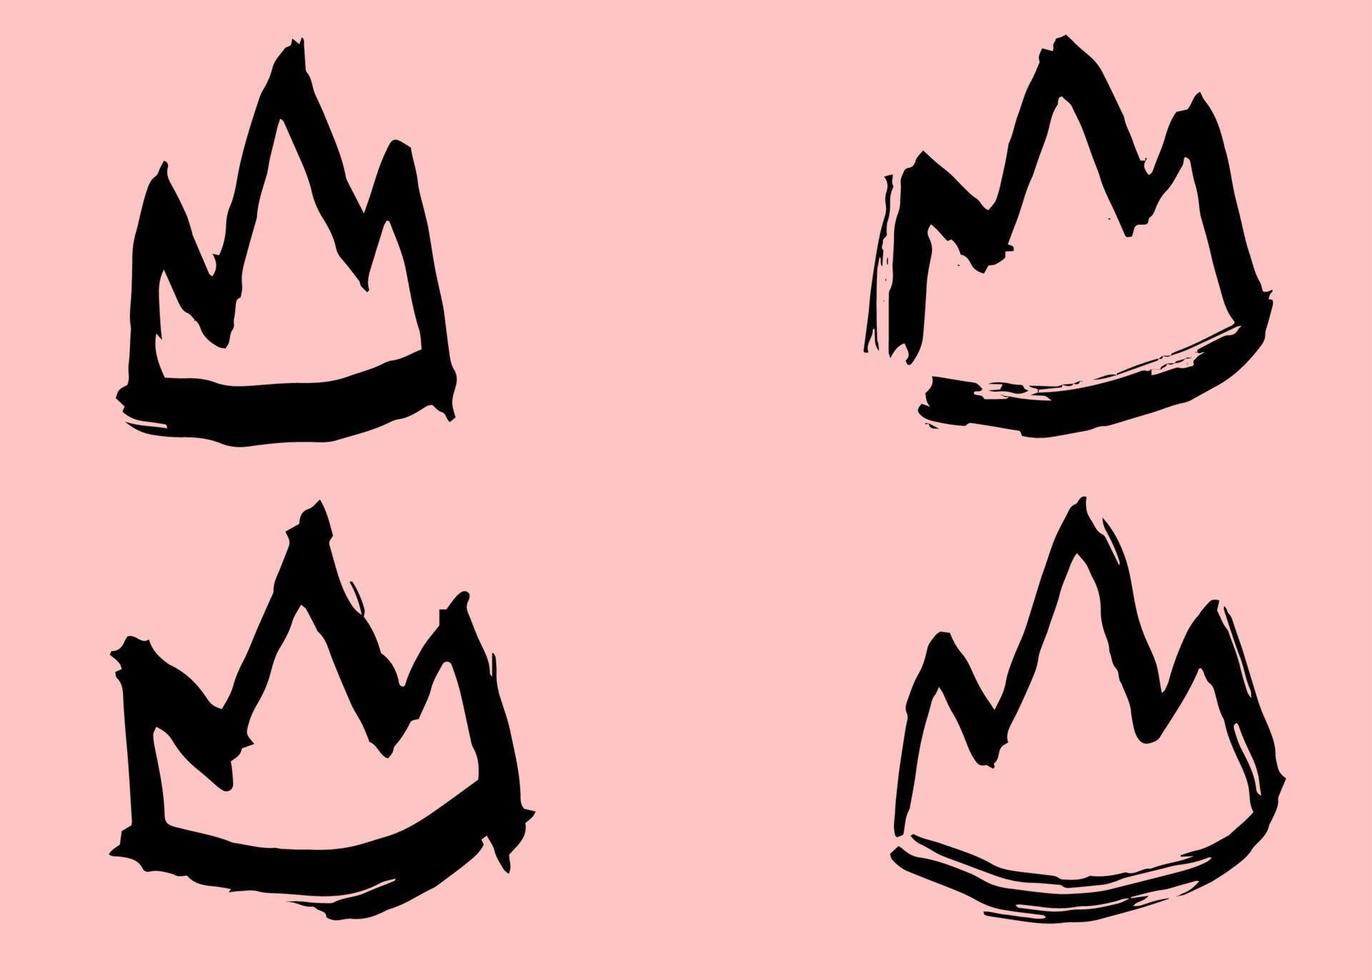 Crown logo graffiti icon. Black elements isolated on white background. Vector illustration.